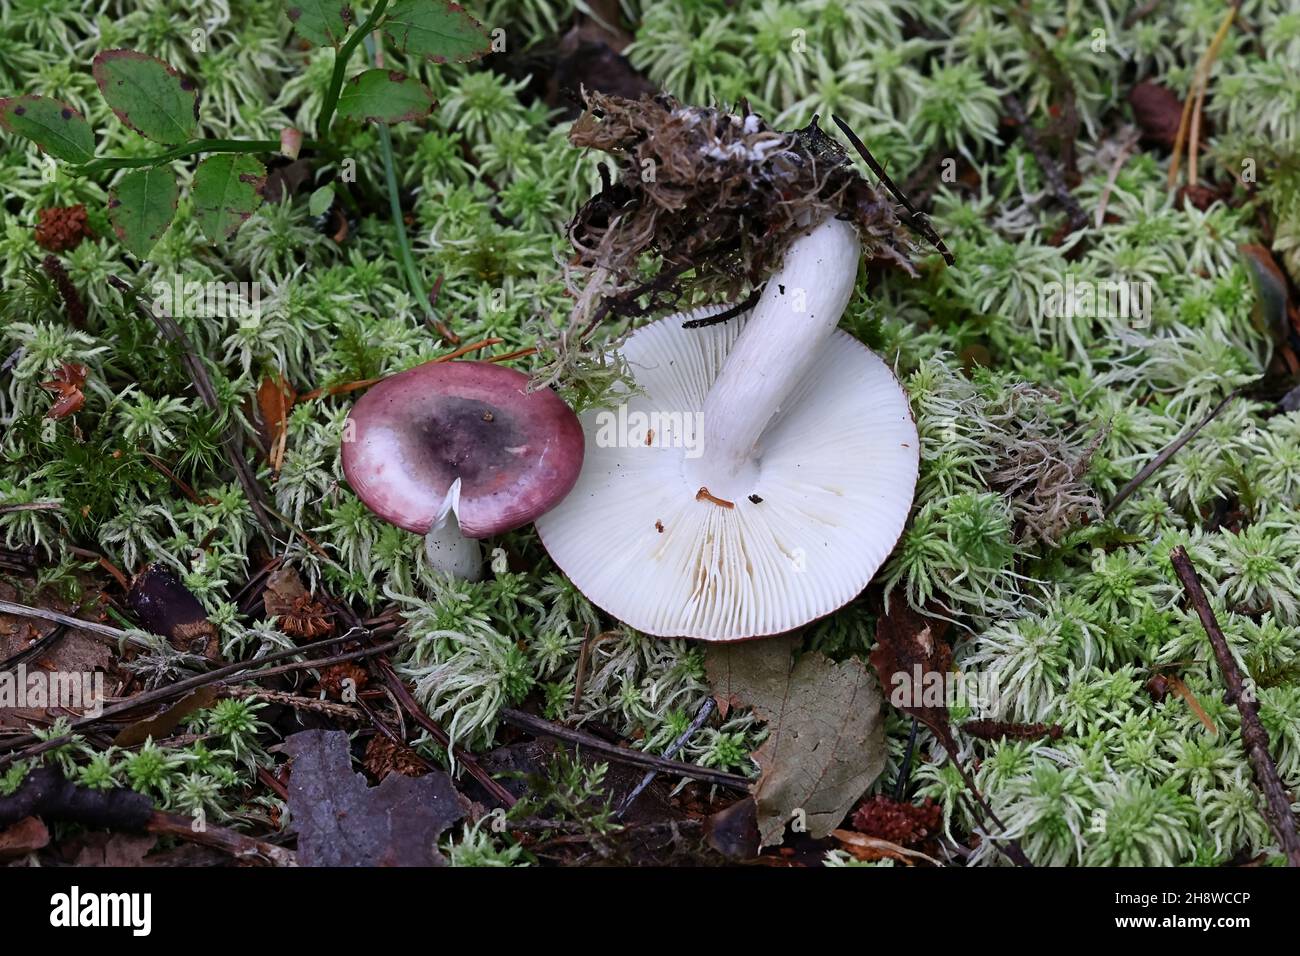 Russula atrorubens, also called Russula atropurpurea, commonly known as purple brittlegill, wild mushroom from Finland Stock Photo